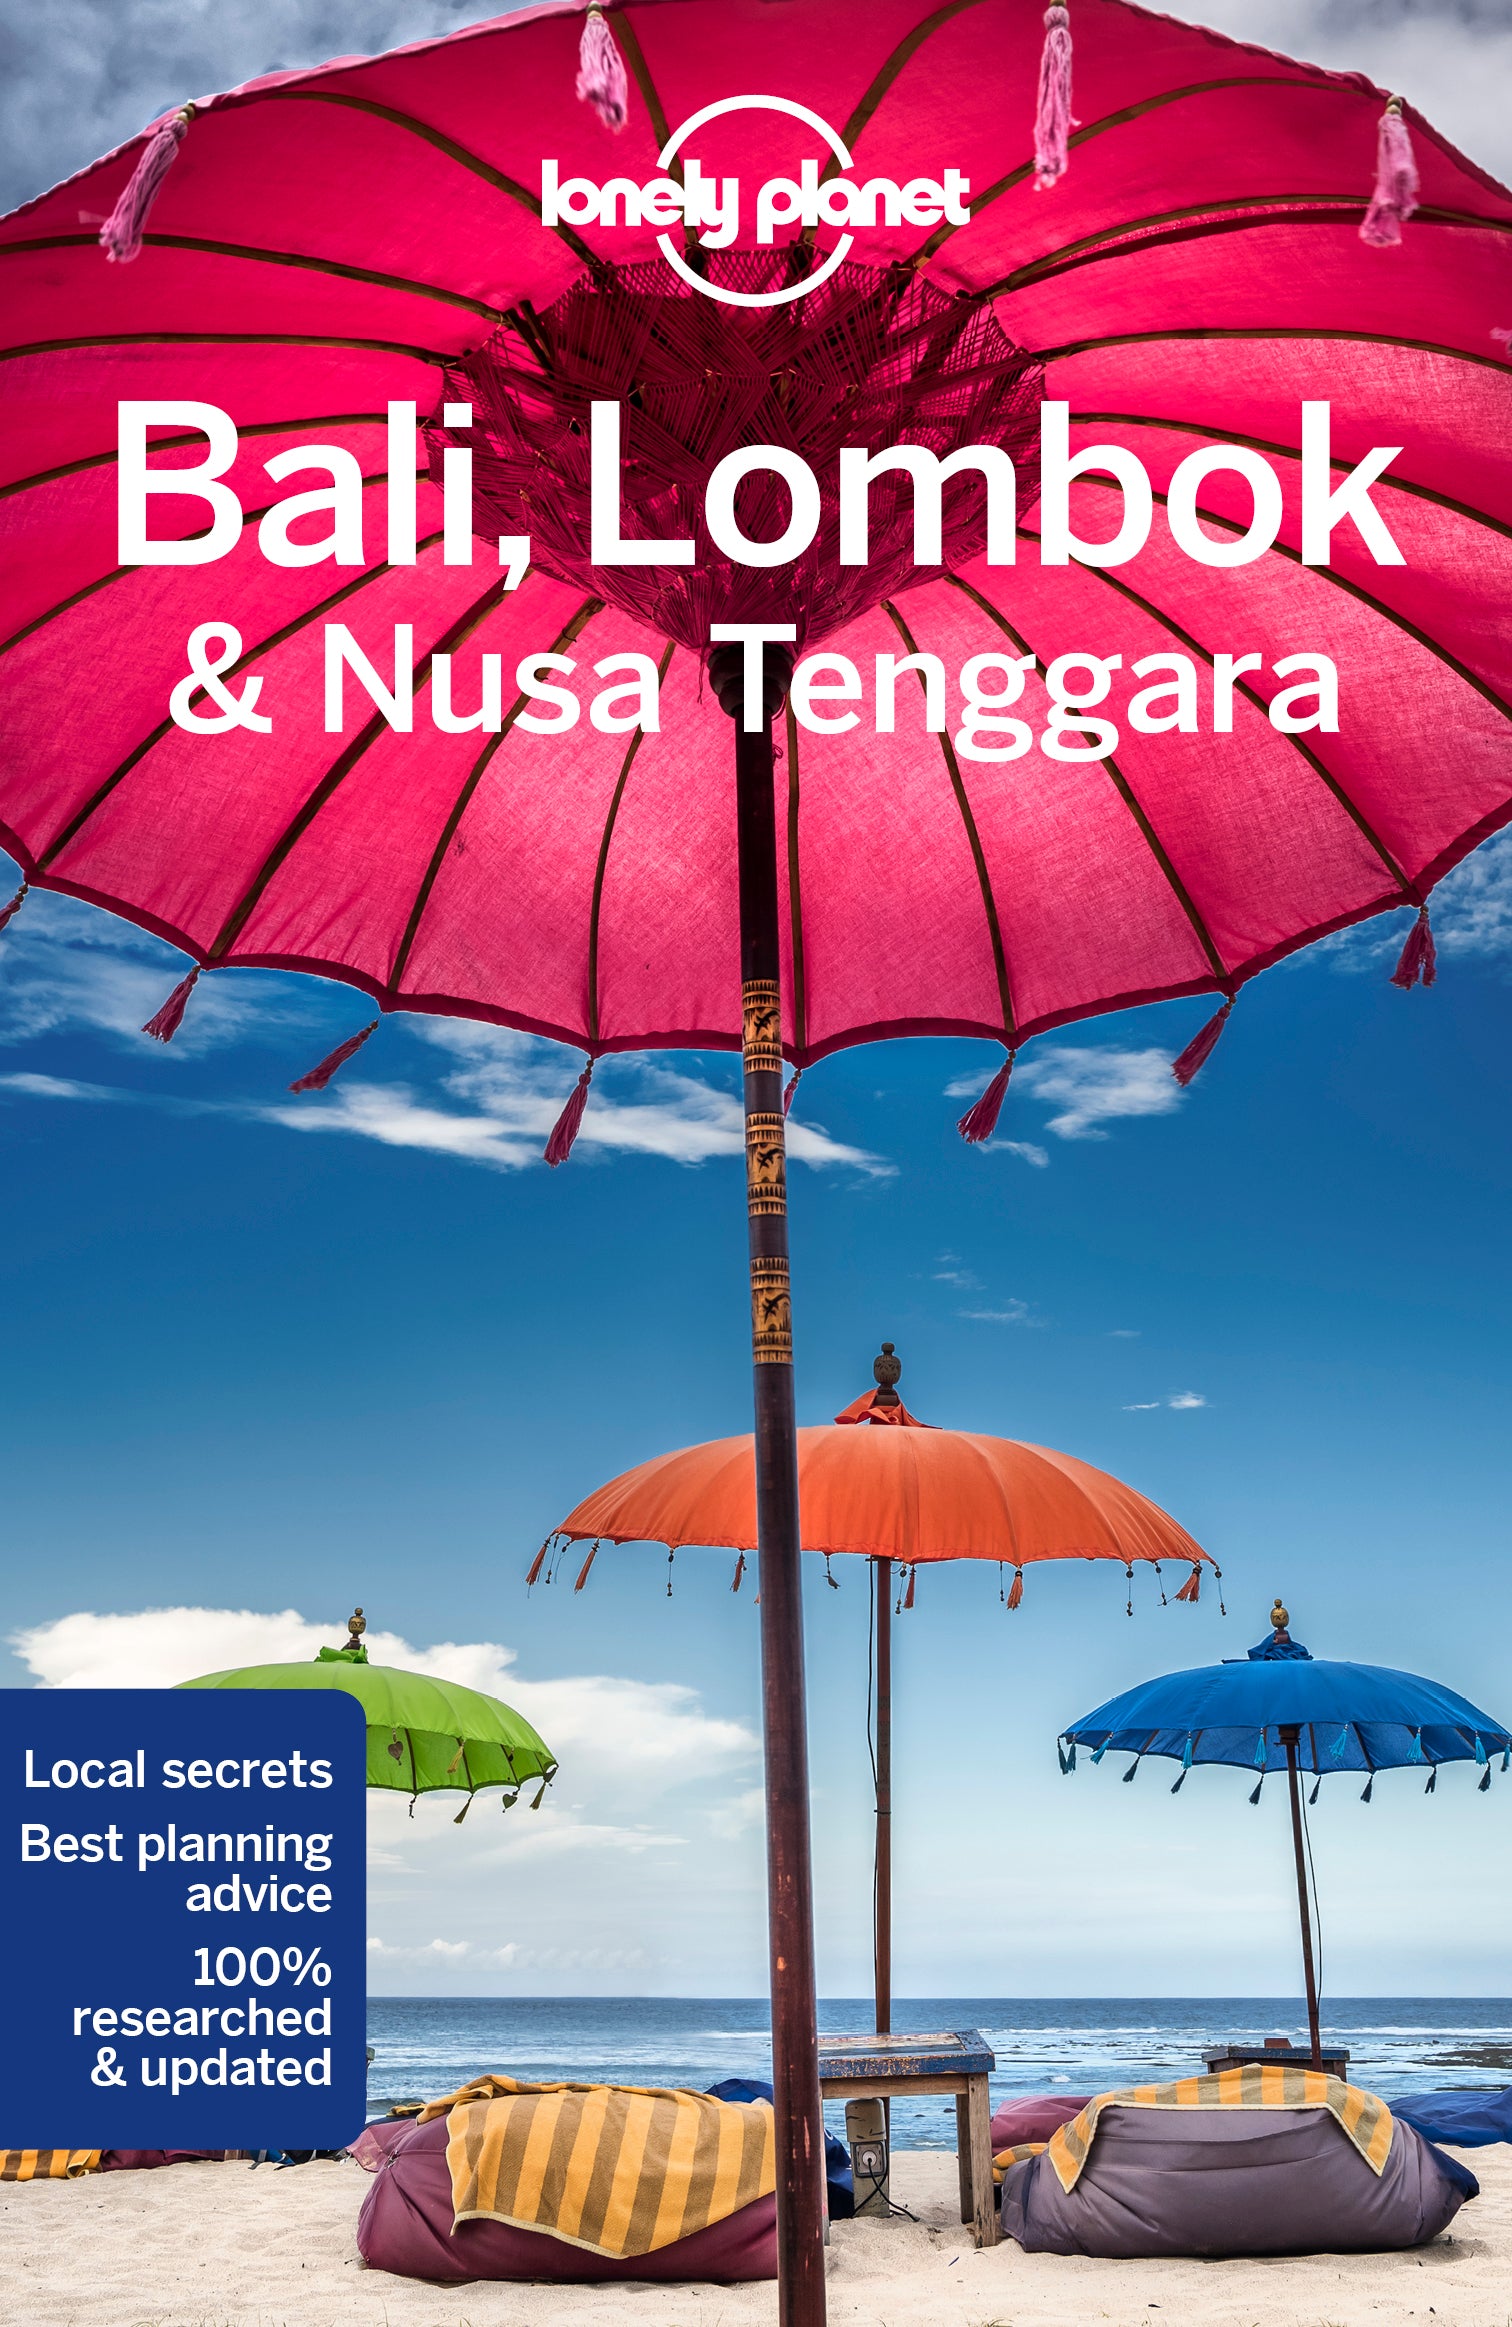 Lonely Planet’s Bali, Lombok & Nusa Tenggara (18th Edition)